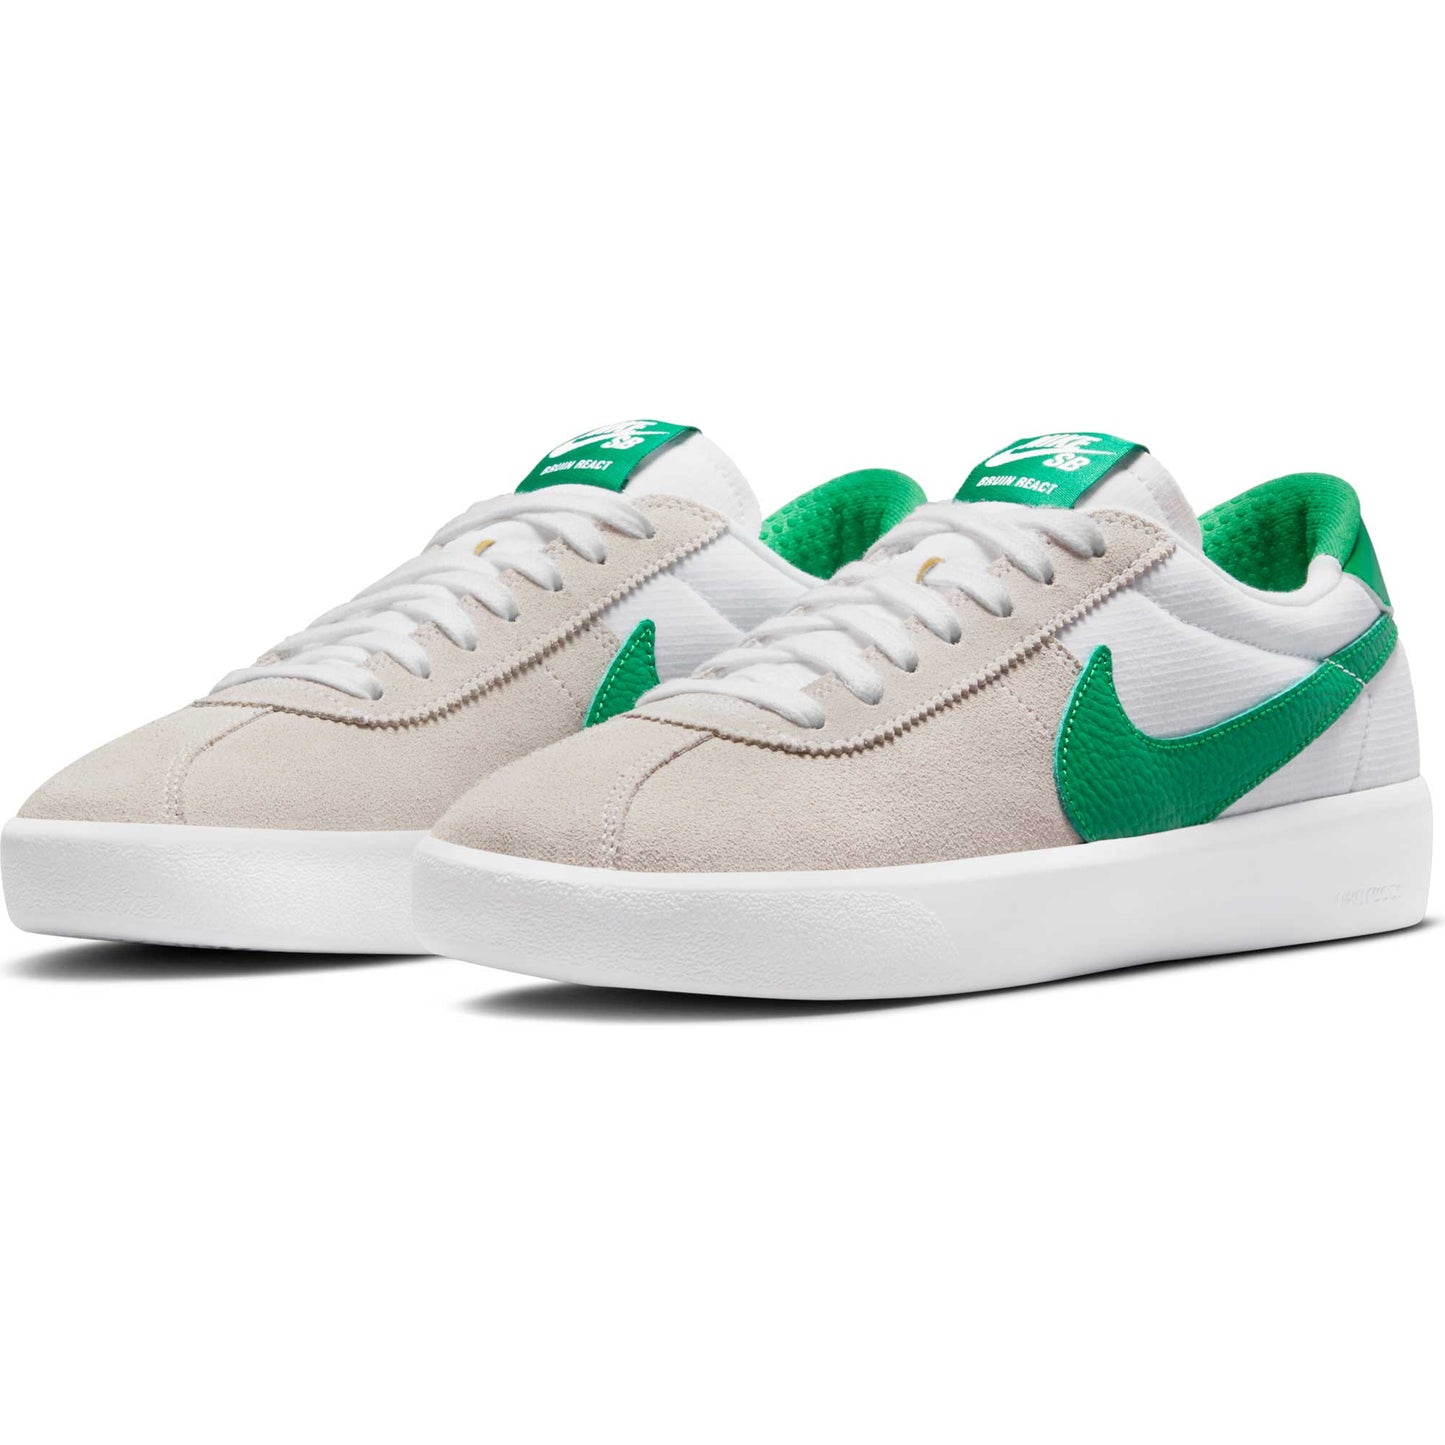 Nike SB Bruin React, white/lucky green-white-lucky green - Tiki Room Skateboards - 5